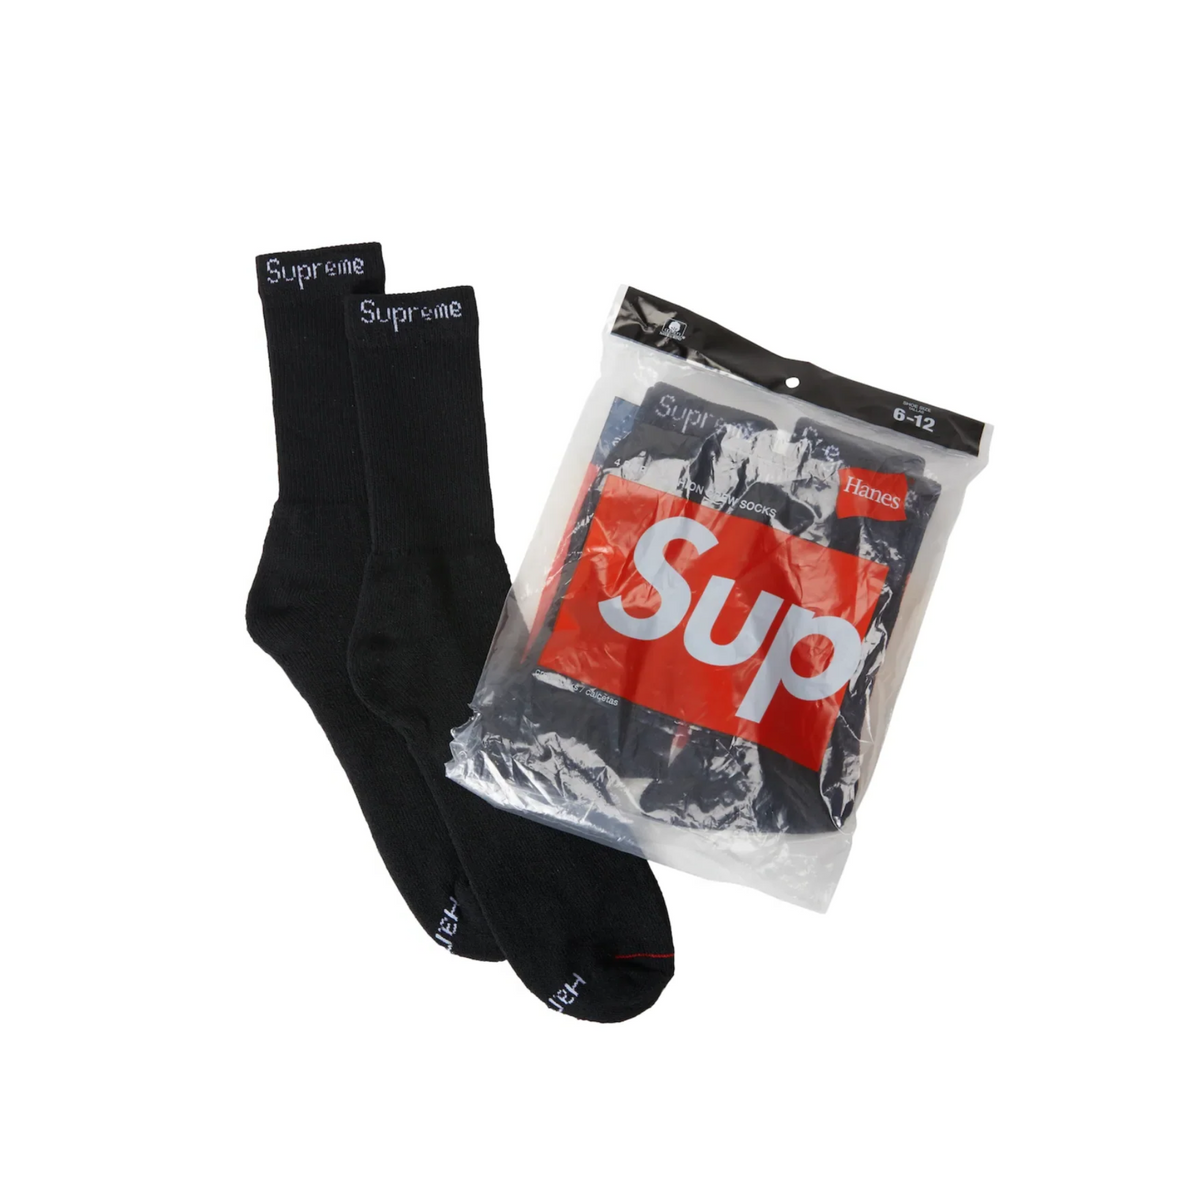 Supreme Hanes Socks (4 stk.) "Black"